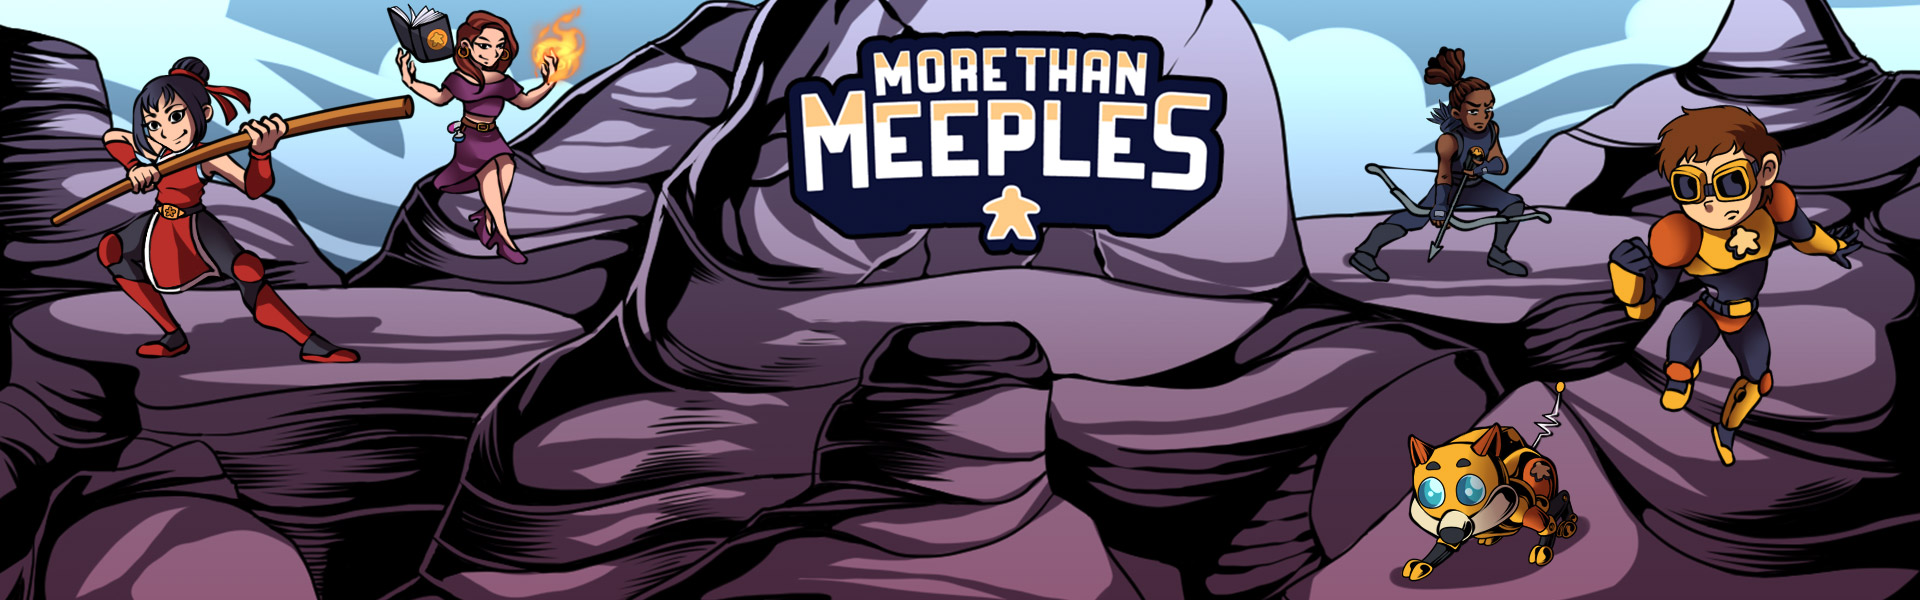 More Than Meeples Banner desktop.